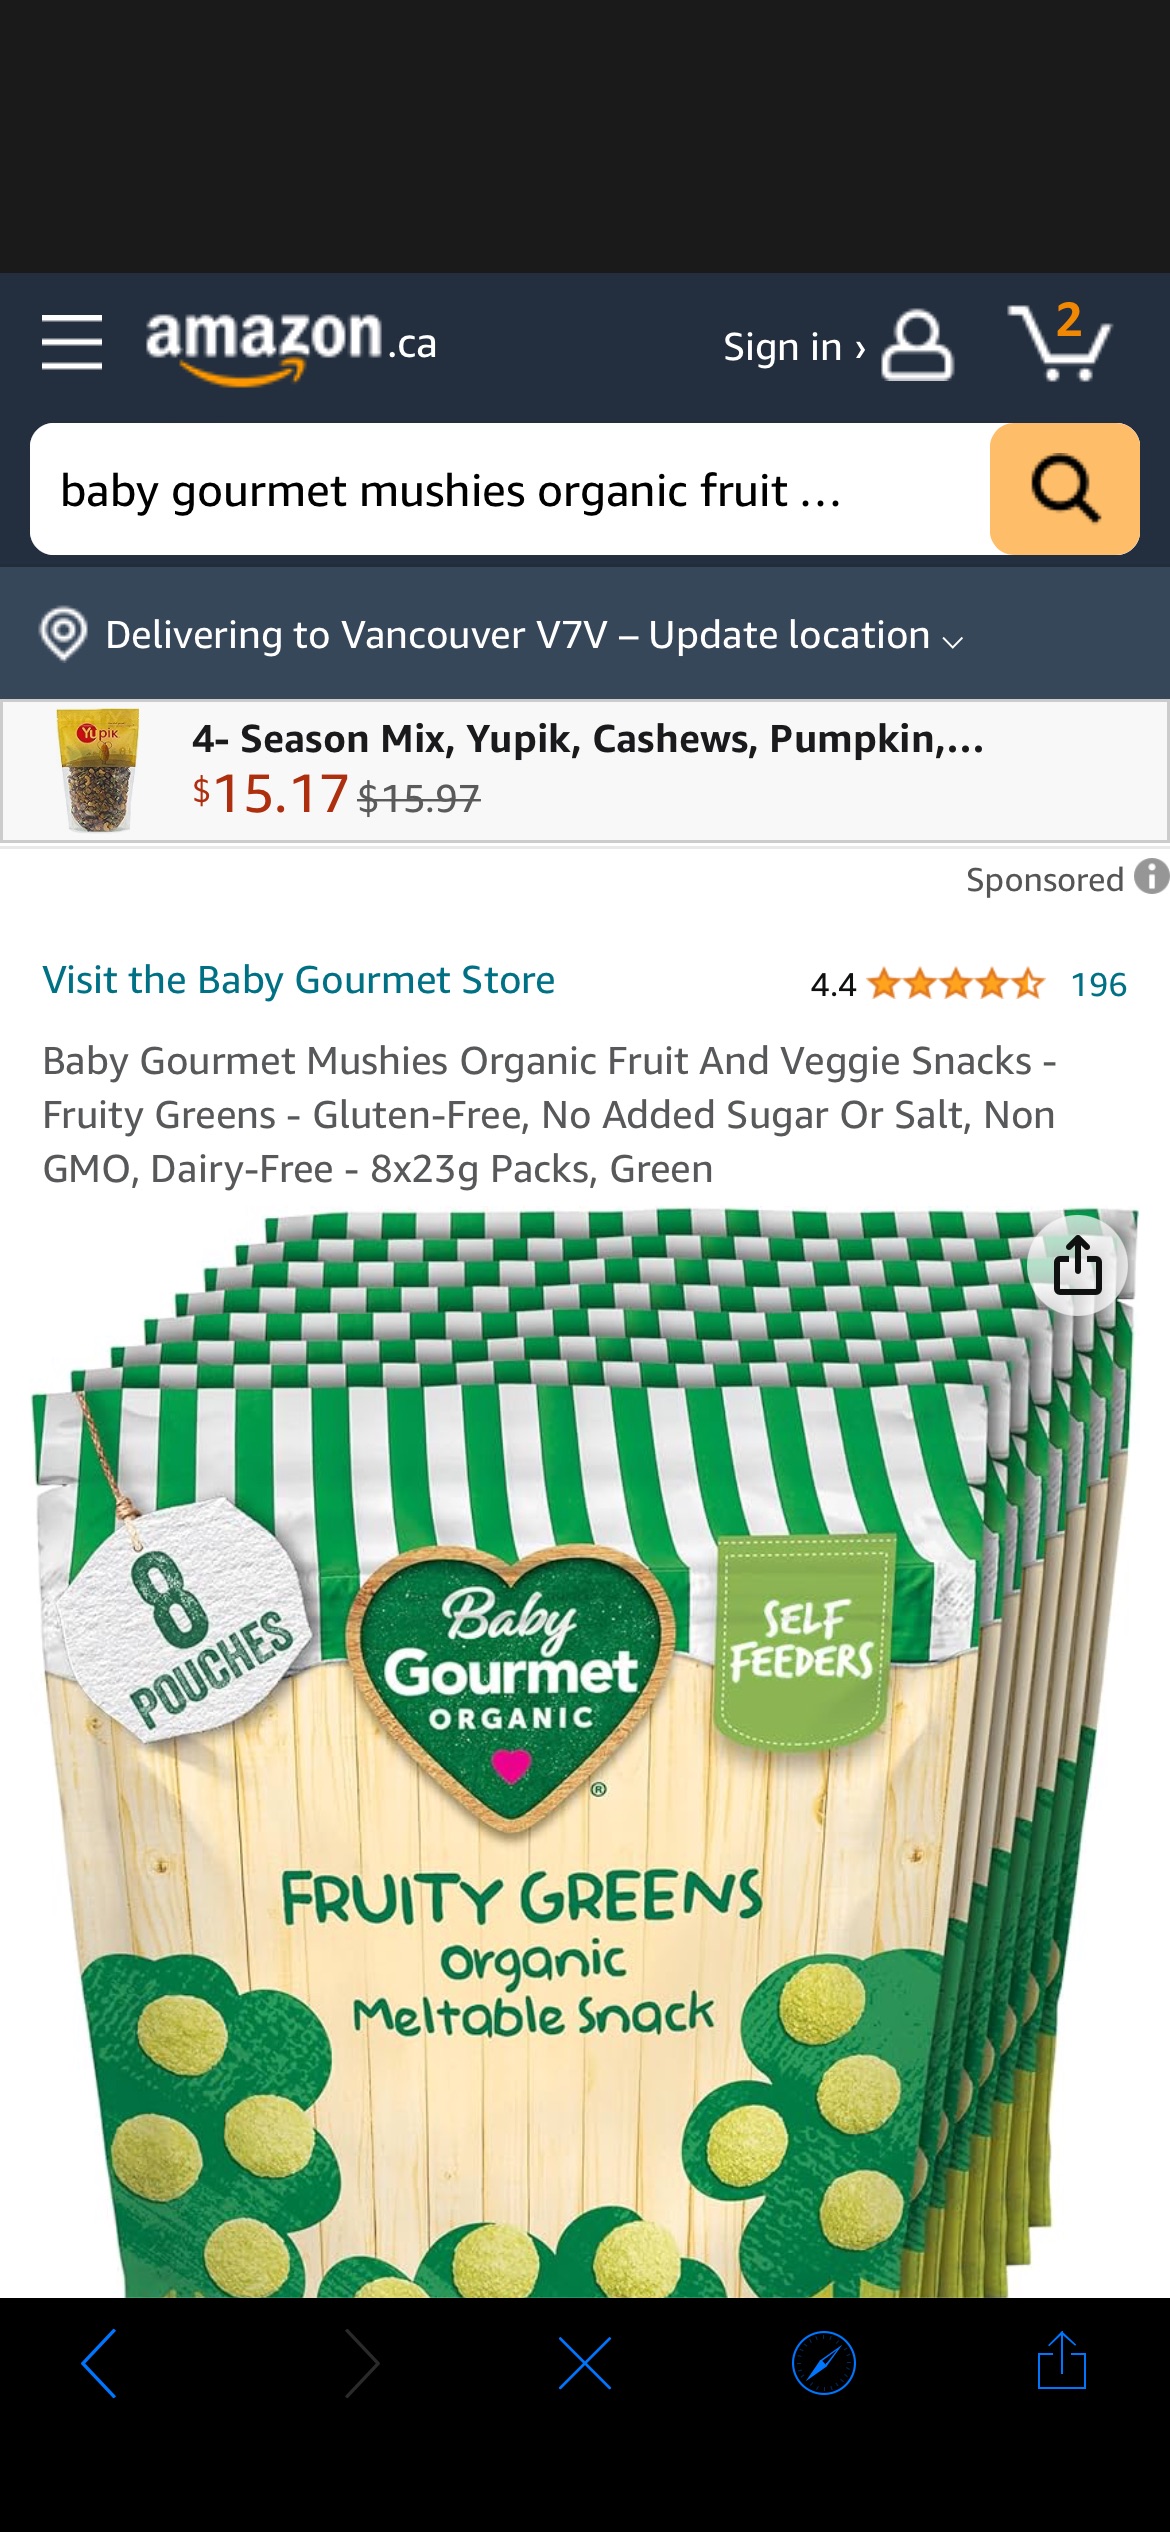 Baby Gourmet Mushies Organic Fruit And Veggie Snacks - Fruity Greens - Gluten-Free, No Added Sugar Or Salt, Non GMO, Dairy-Free - 8x23g Packs, Green : Amazon.ca: Grocery & Gourmet Food